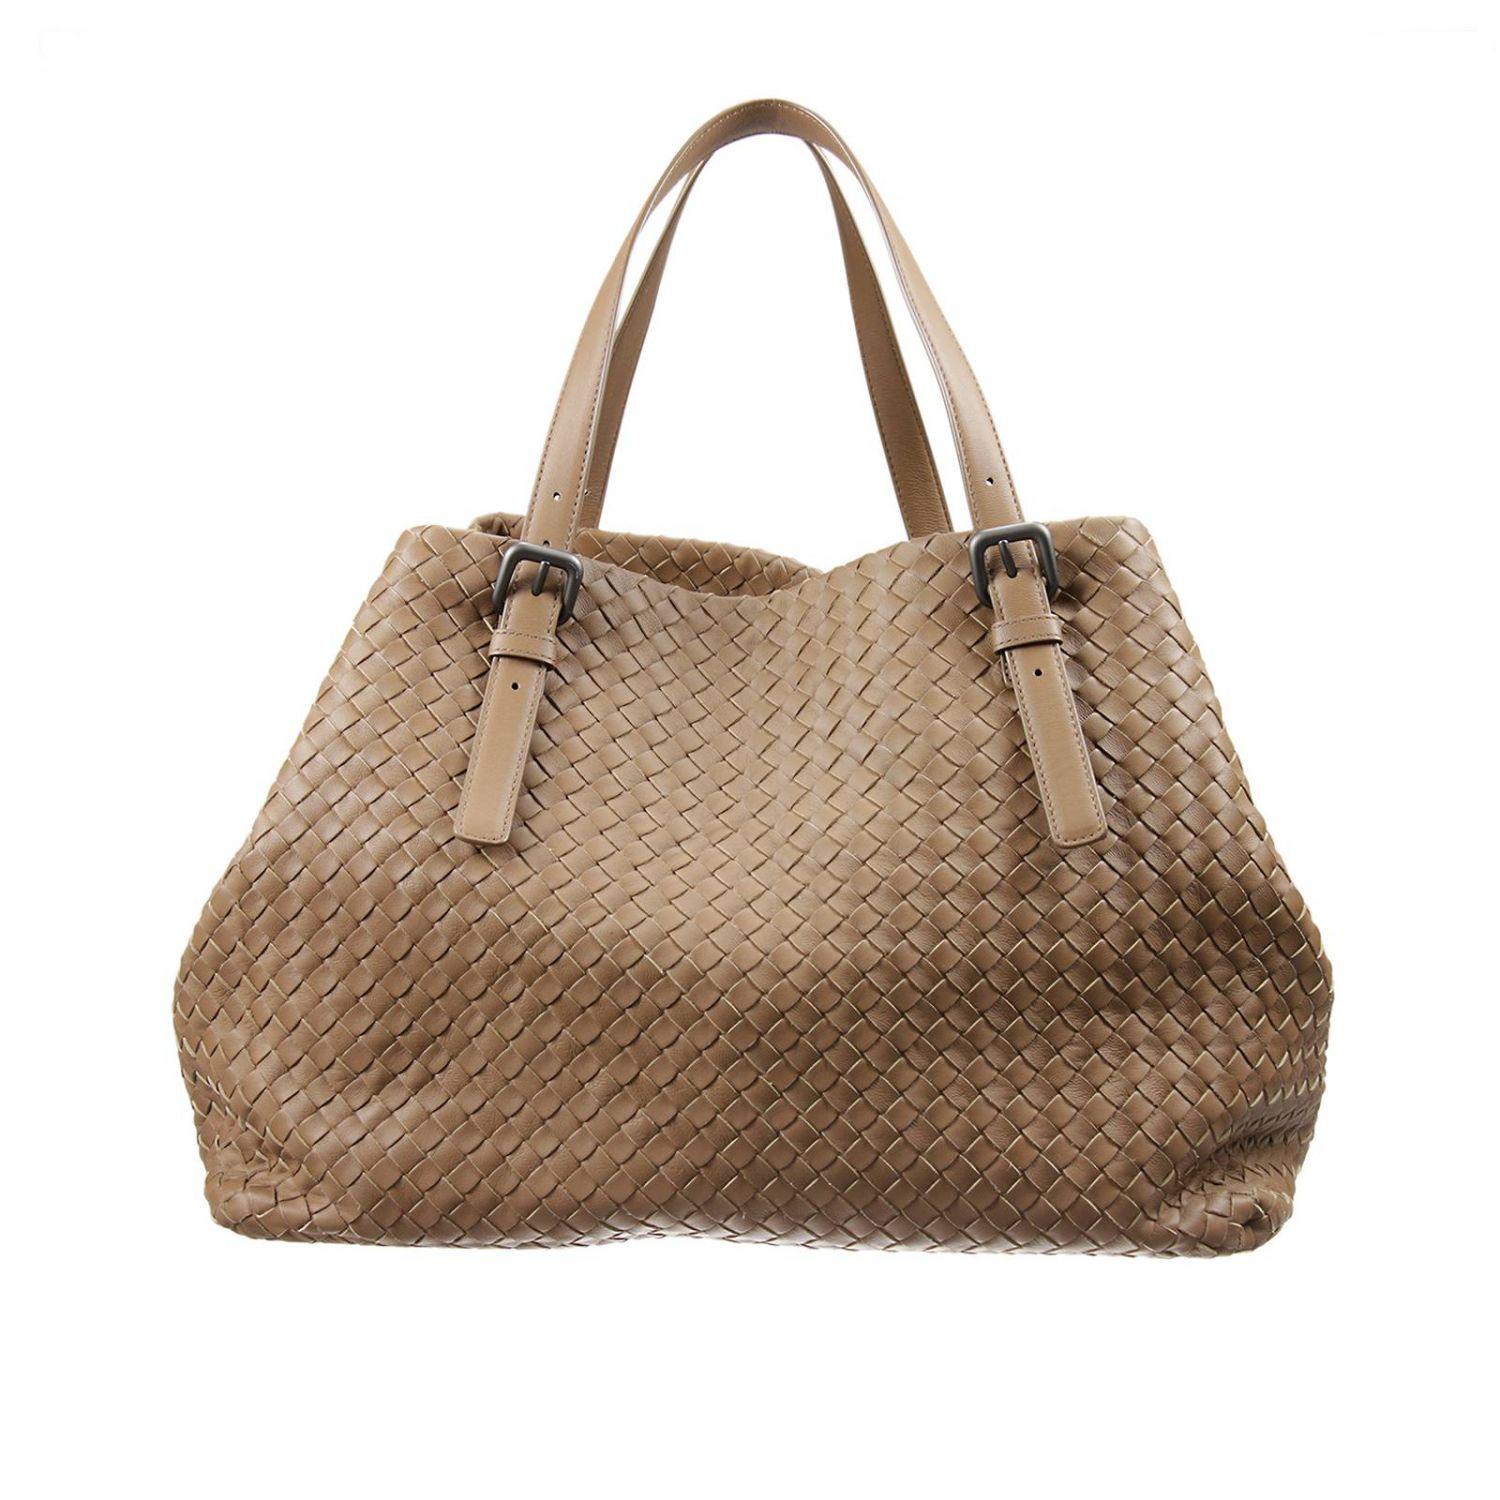 Lyst - Bottega Veneta Large 'A' Shape Tote Bag in Brown - Save 11. ...